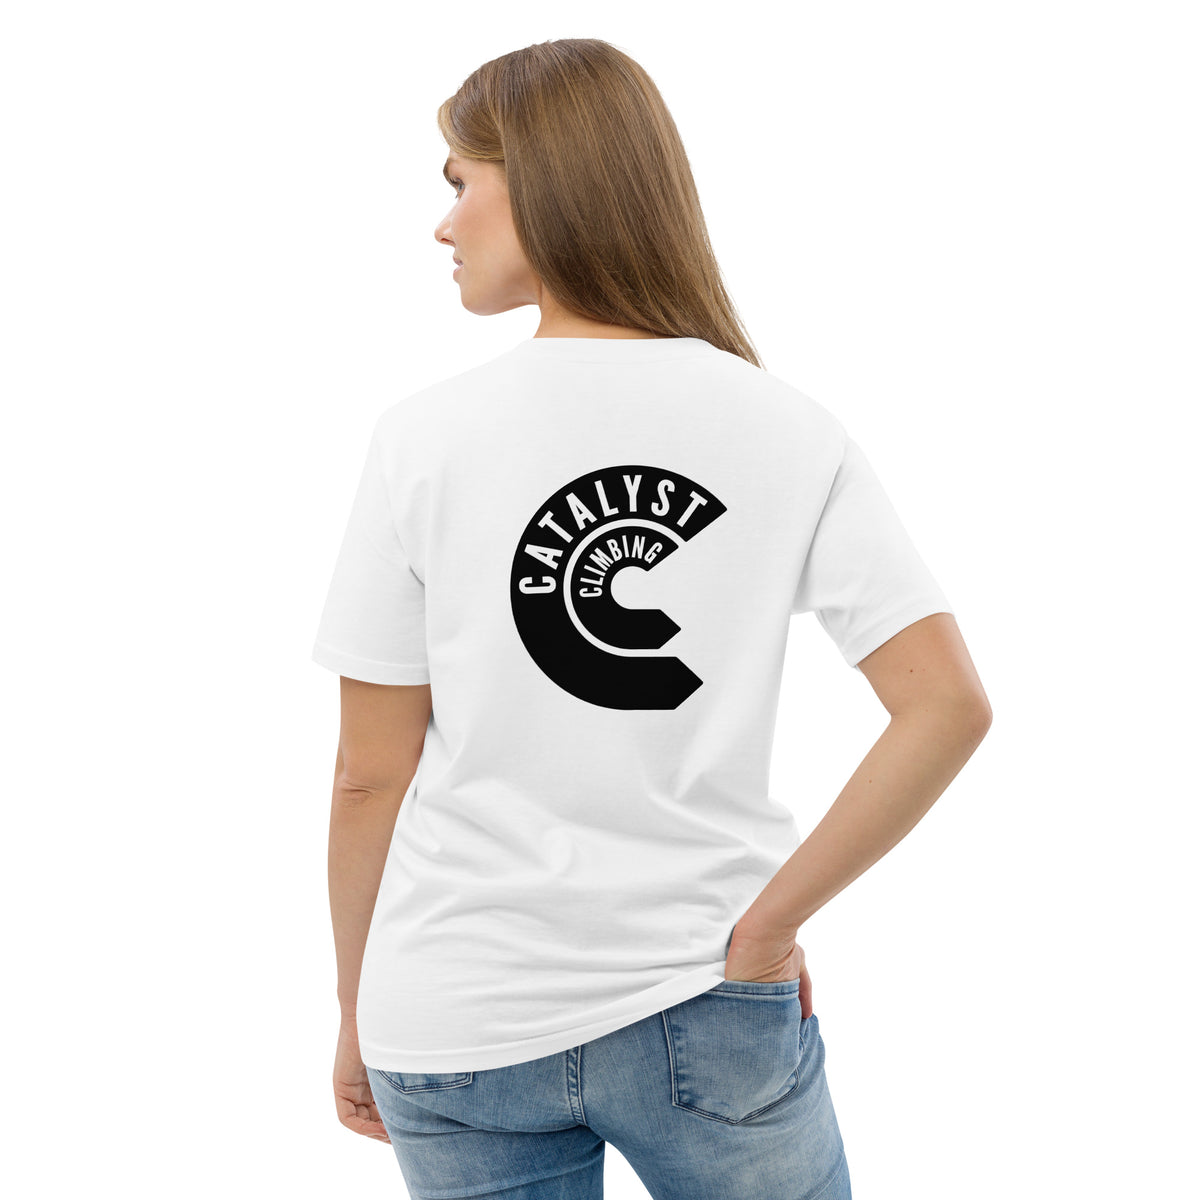 Catalyst Athlete T-Shirt (Unisex) - White